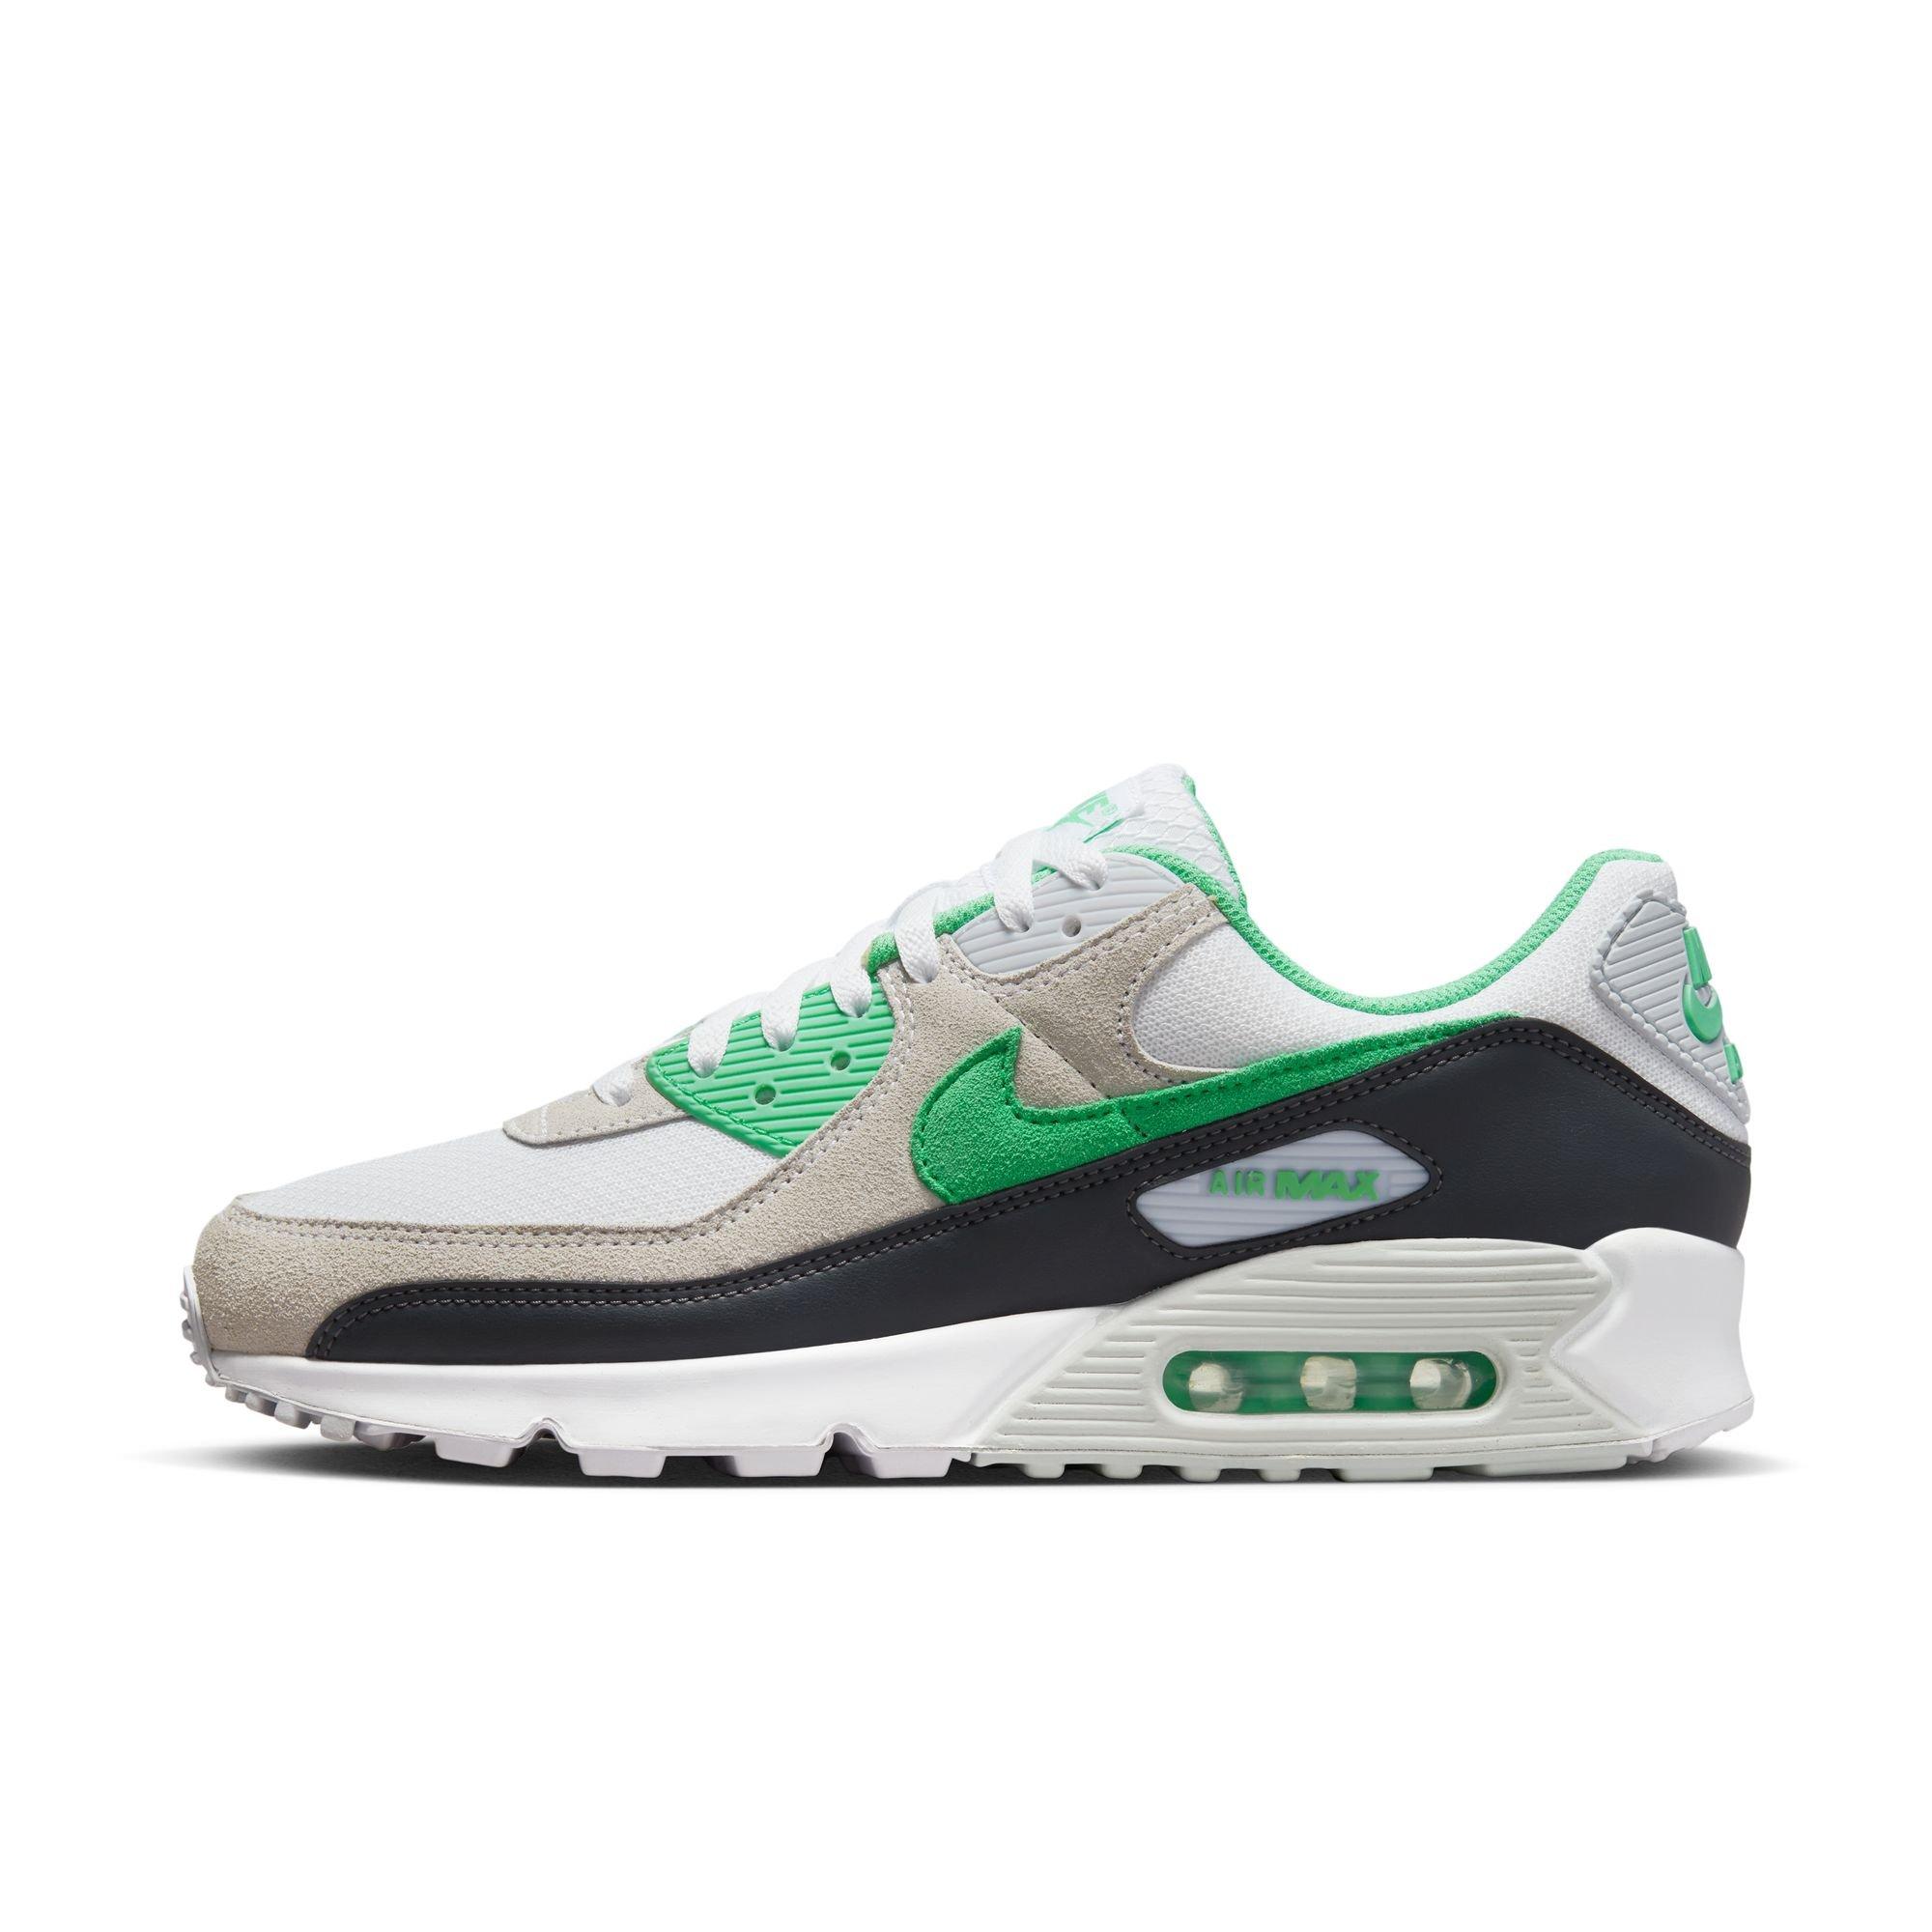 Frons volgorde Misbruik Nike Air Max 90 "White/Spring Green/Anthracite" Men's Shoe